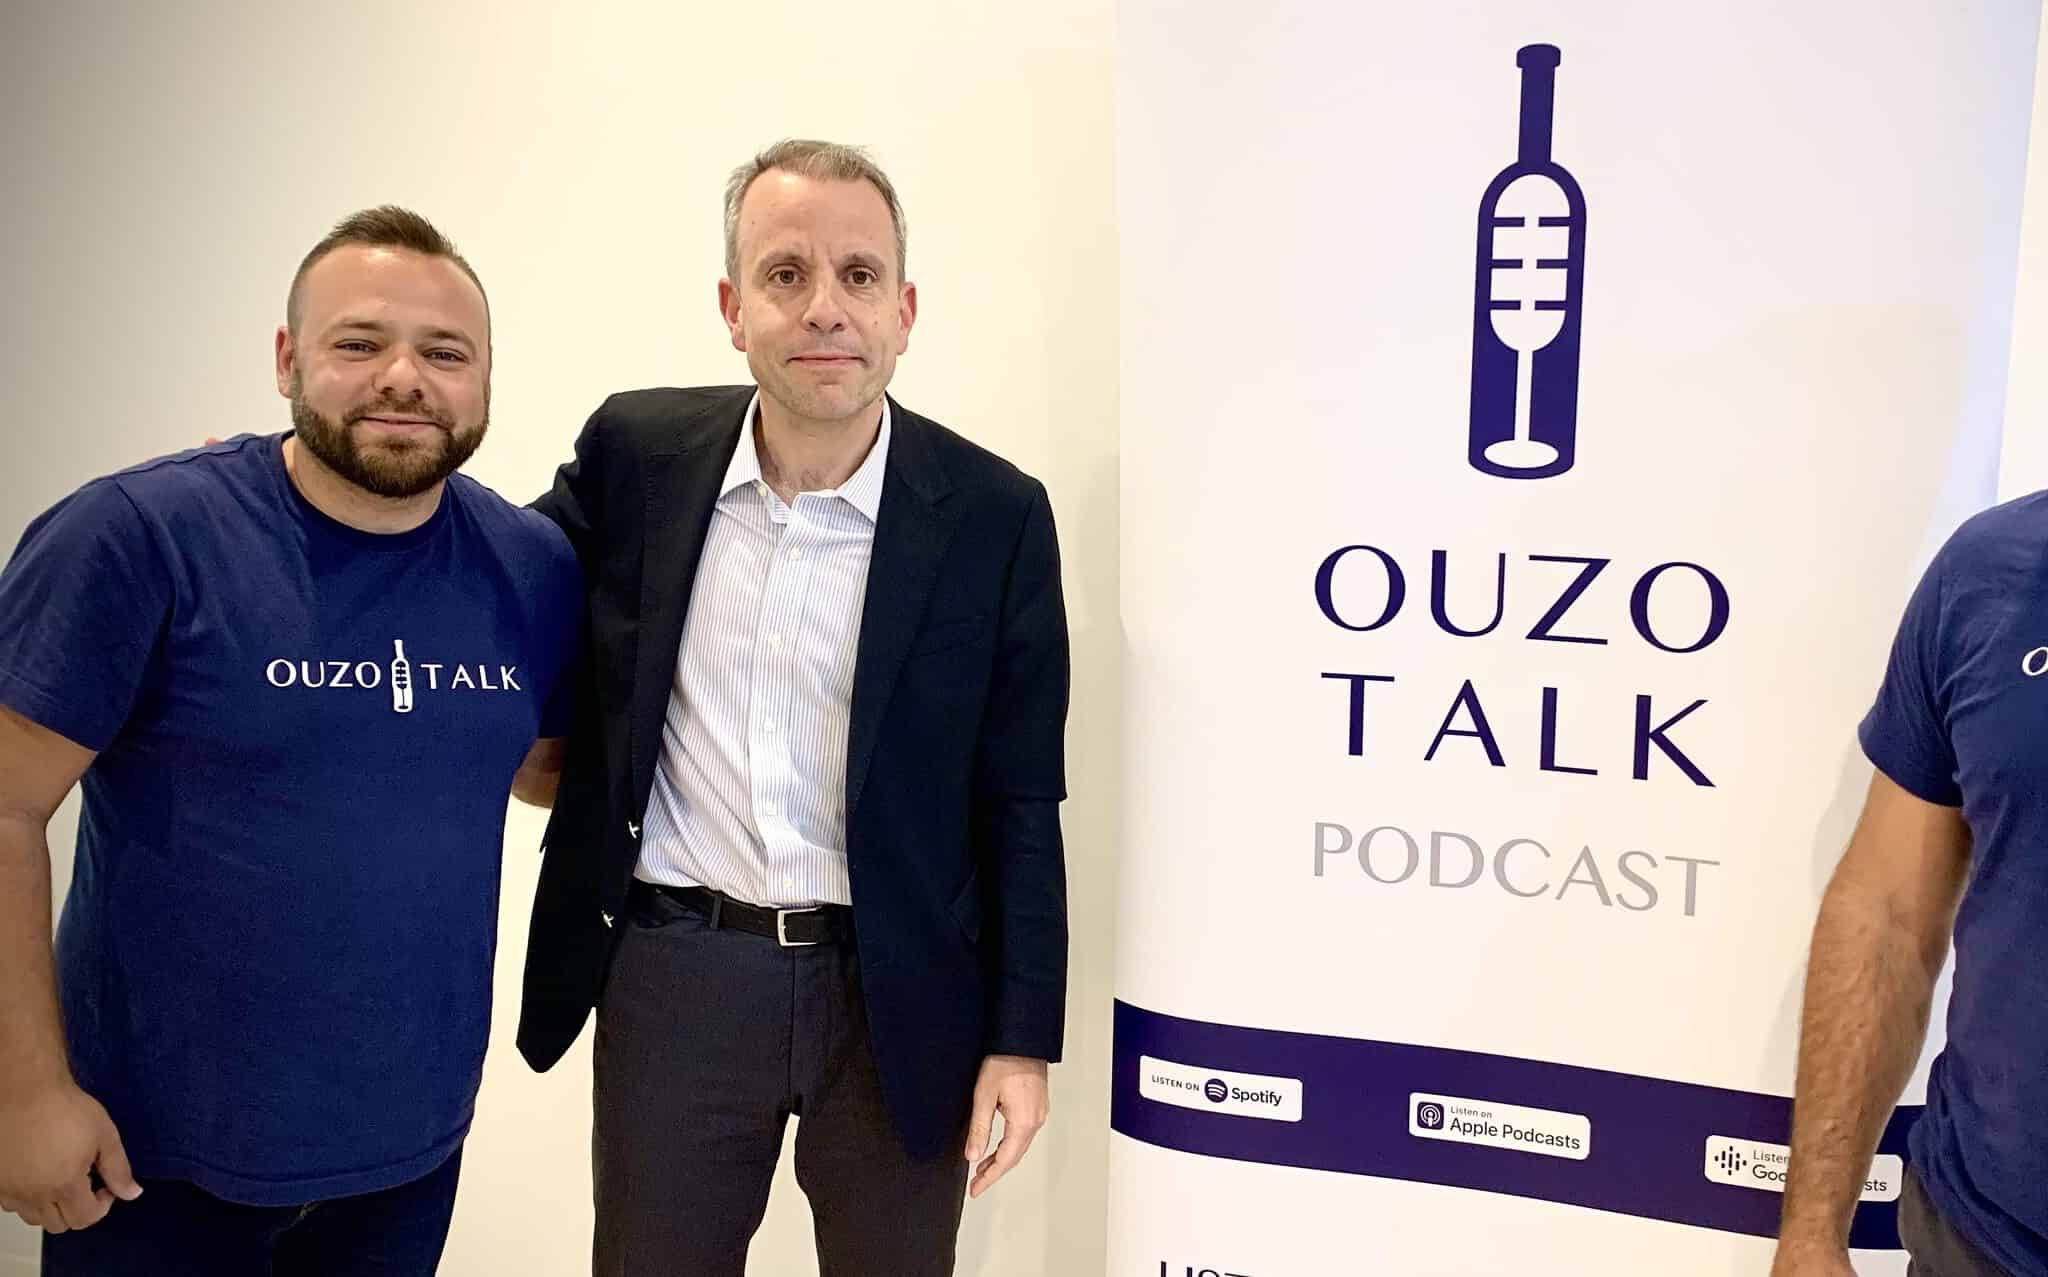 ouzo talk with Greek Consul